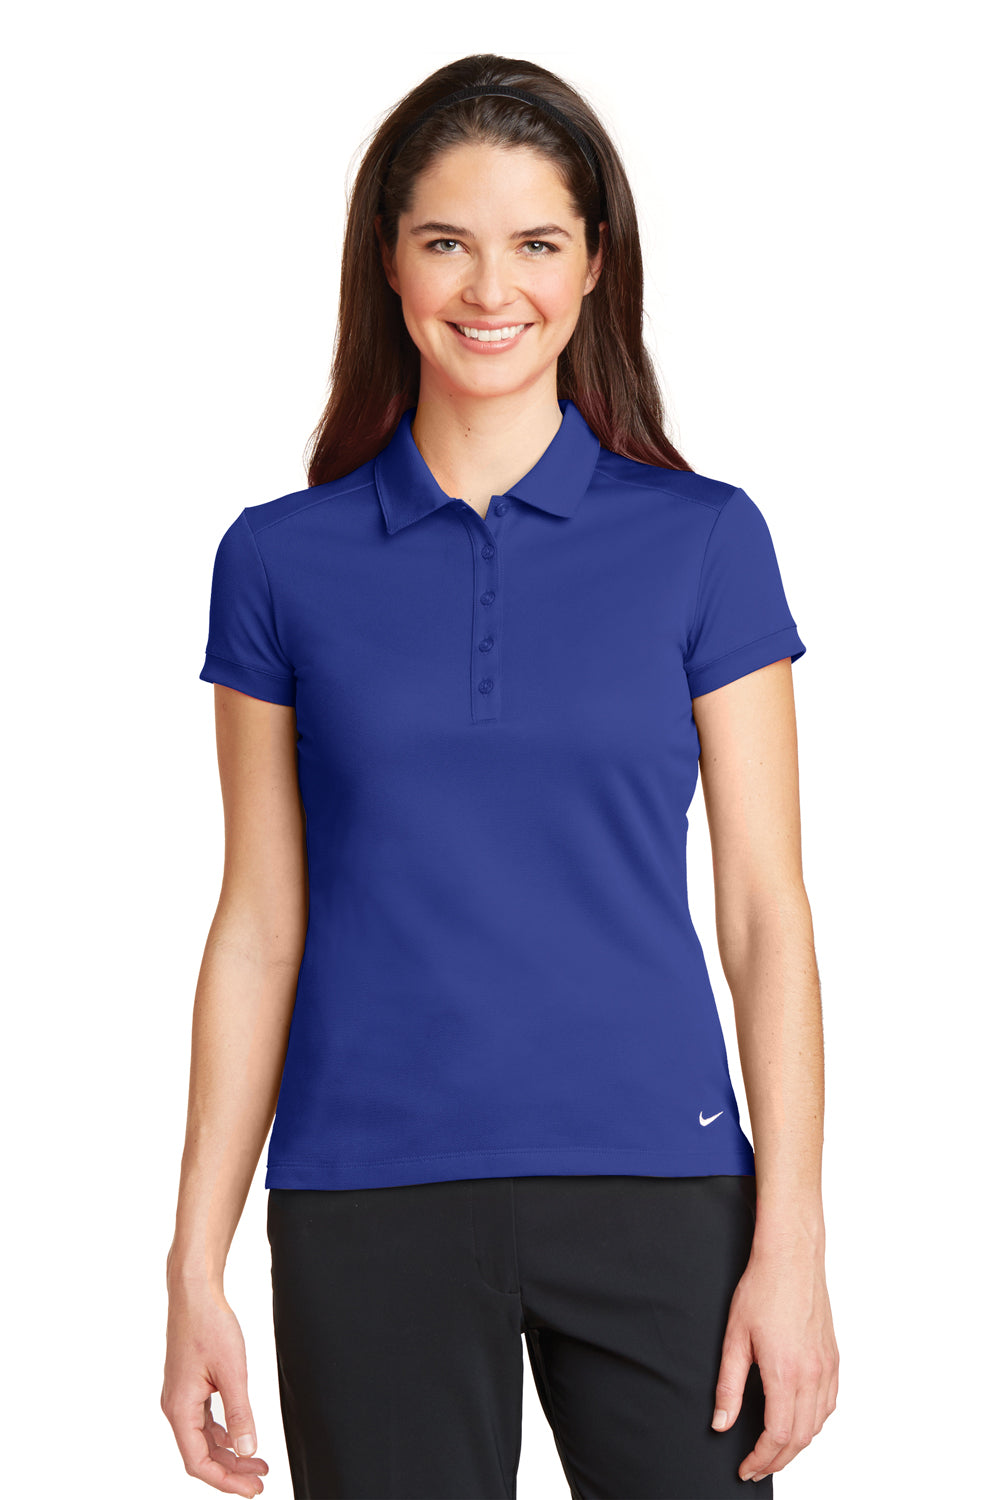 Nike 746100 Womens Icon Dri-Fit Moisture Wicking Short Sleeve Polo Shirt Royal Blue Model Front